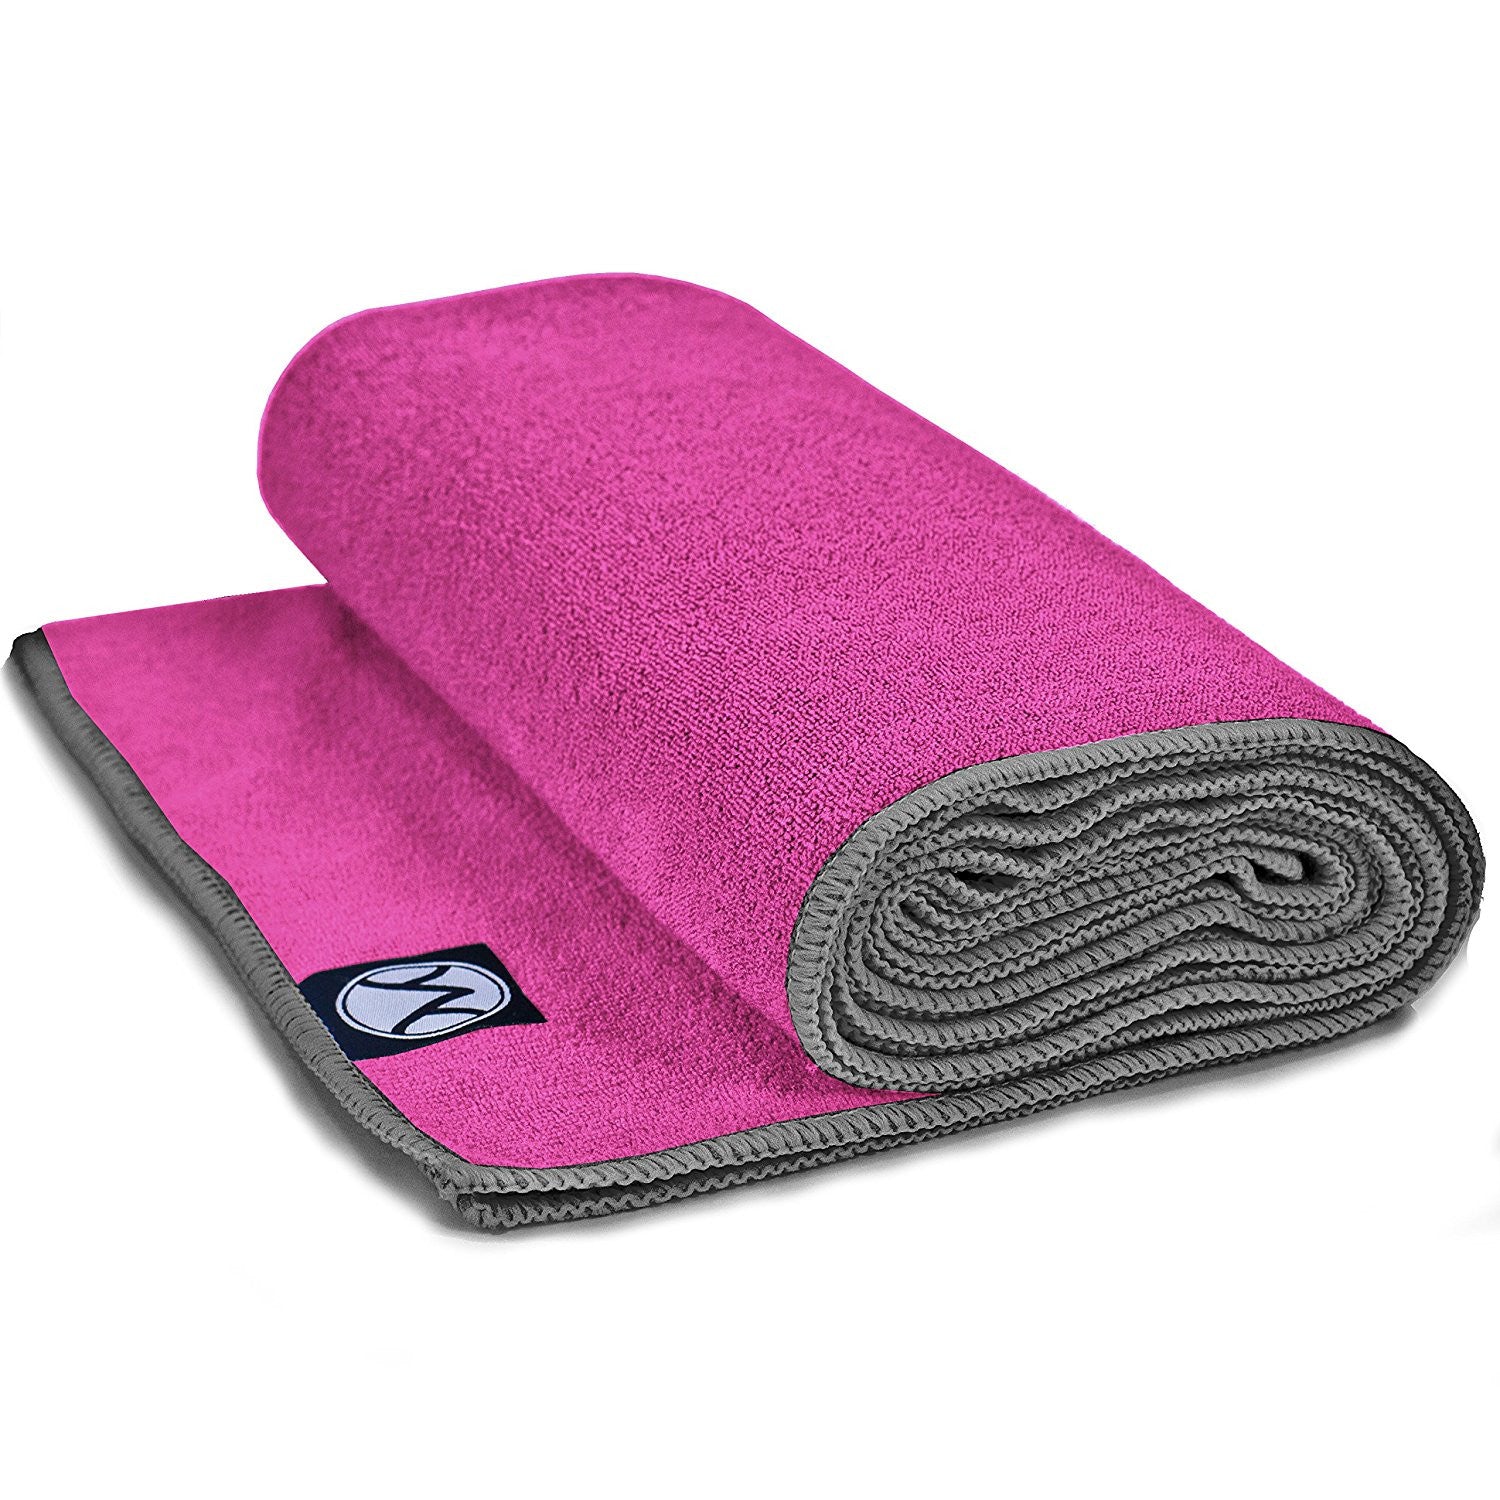 PPING Yoga Towel Non Slip Hot Yoga Towel Non Slip Non Slip Yoga Towel Towel  For Yoga Mat Yoga Towels Mat Towel Non Slip Exercise Mat Towel pink